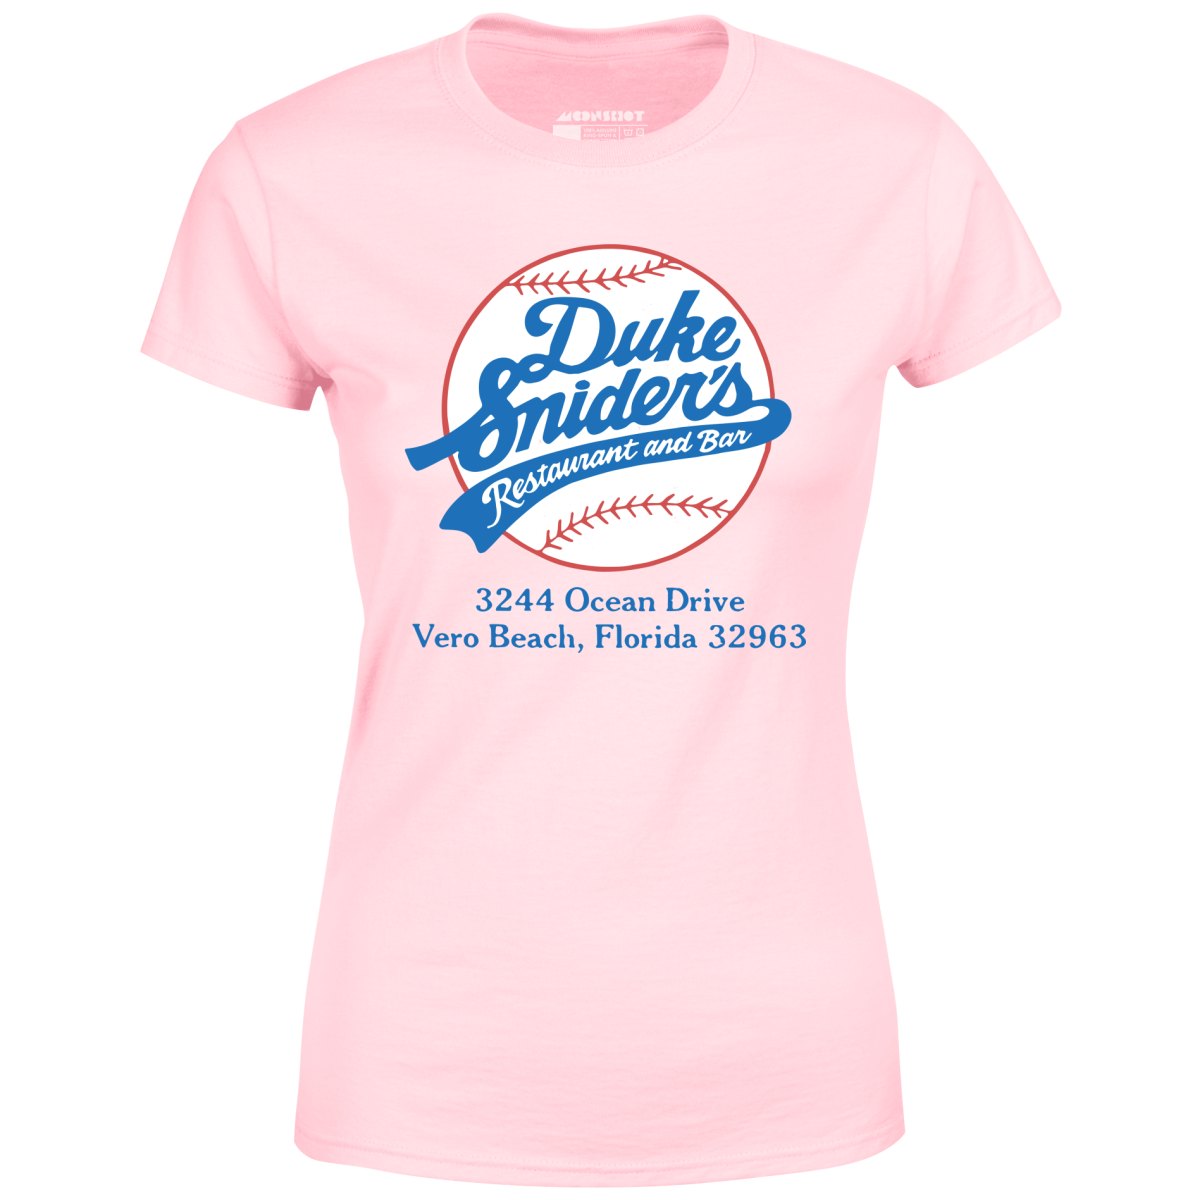 Duke Snider's - Vero Beach, FL - Vintage Restaurant - Women's T-Shirt